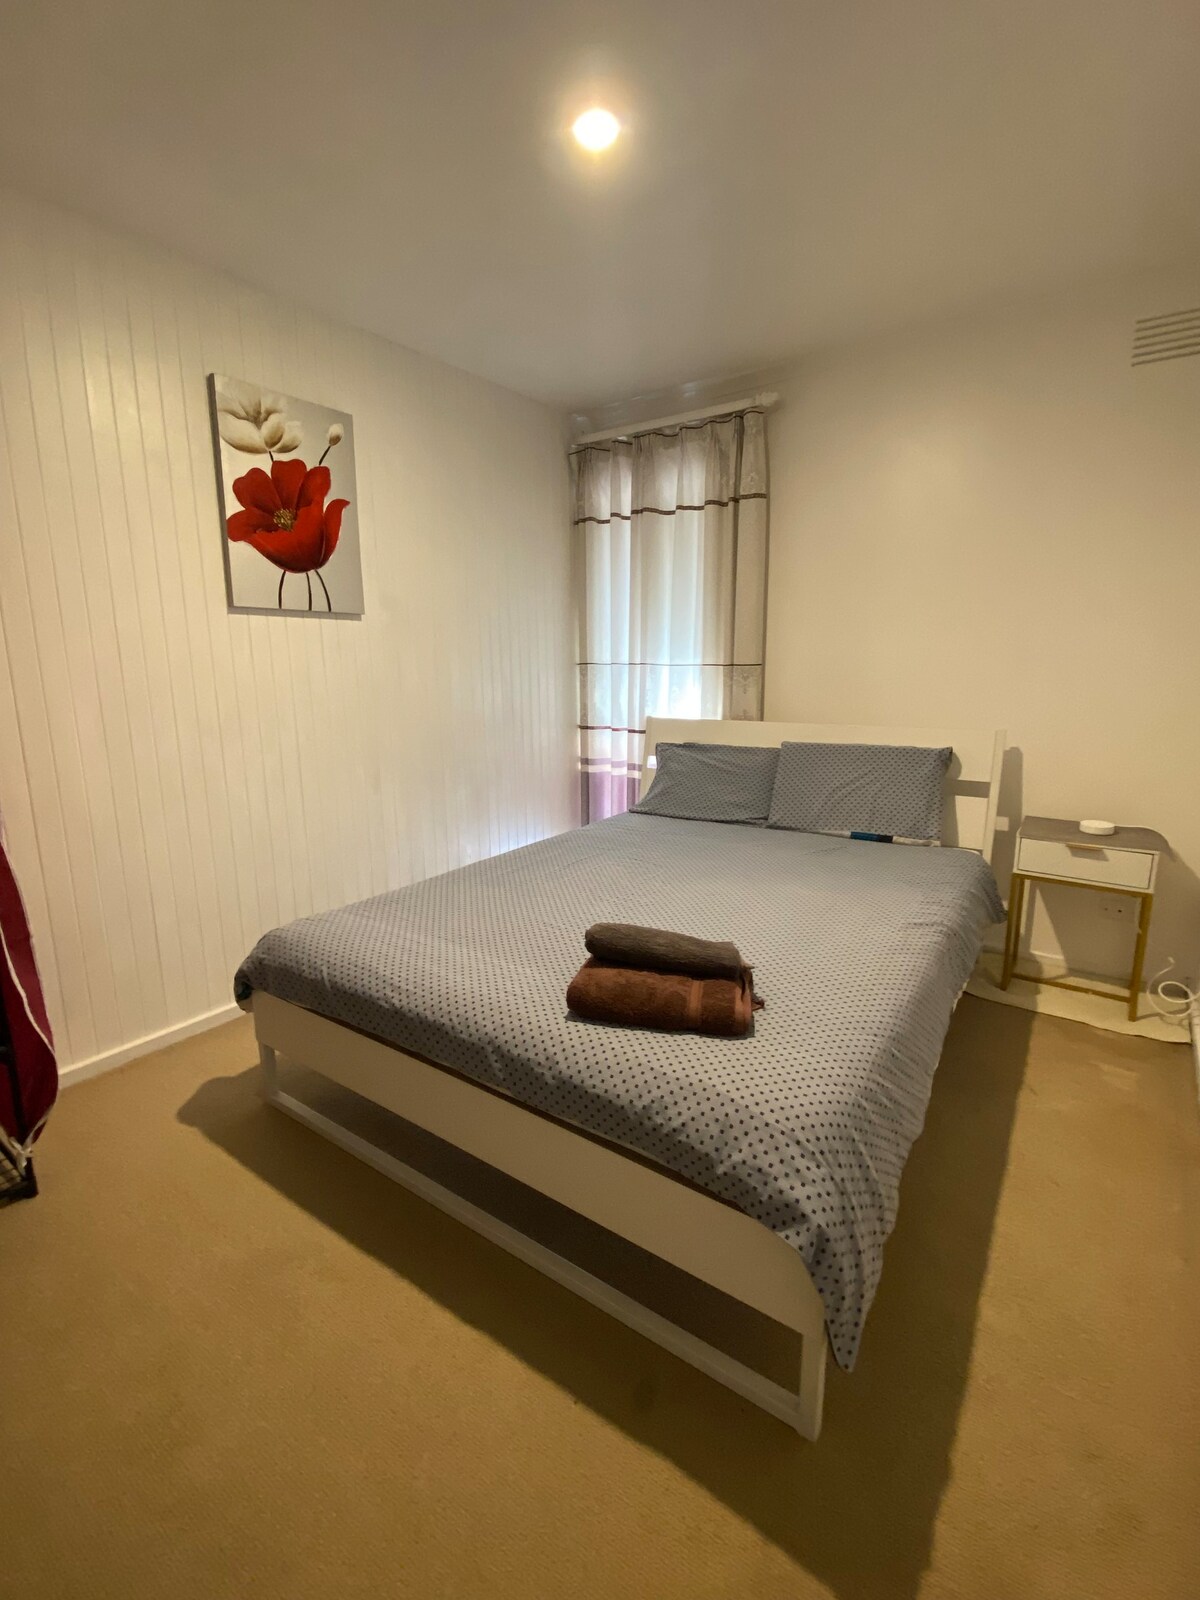 Queen bed room near Doncaster Westfield